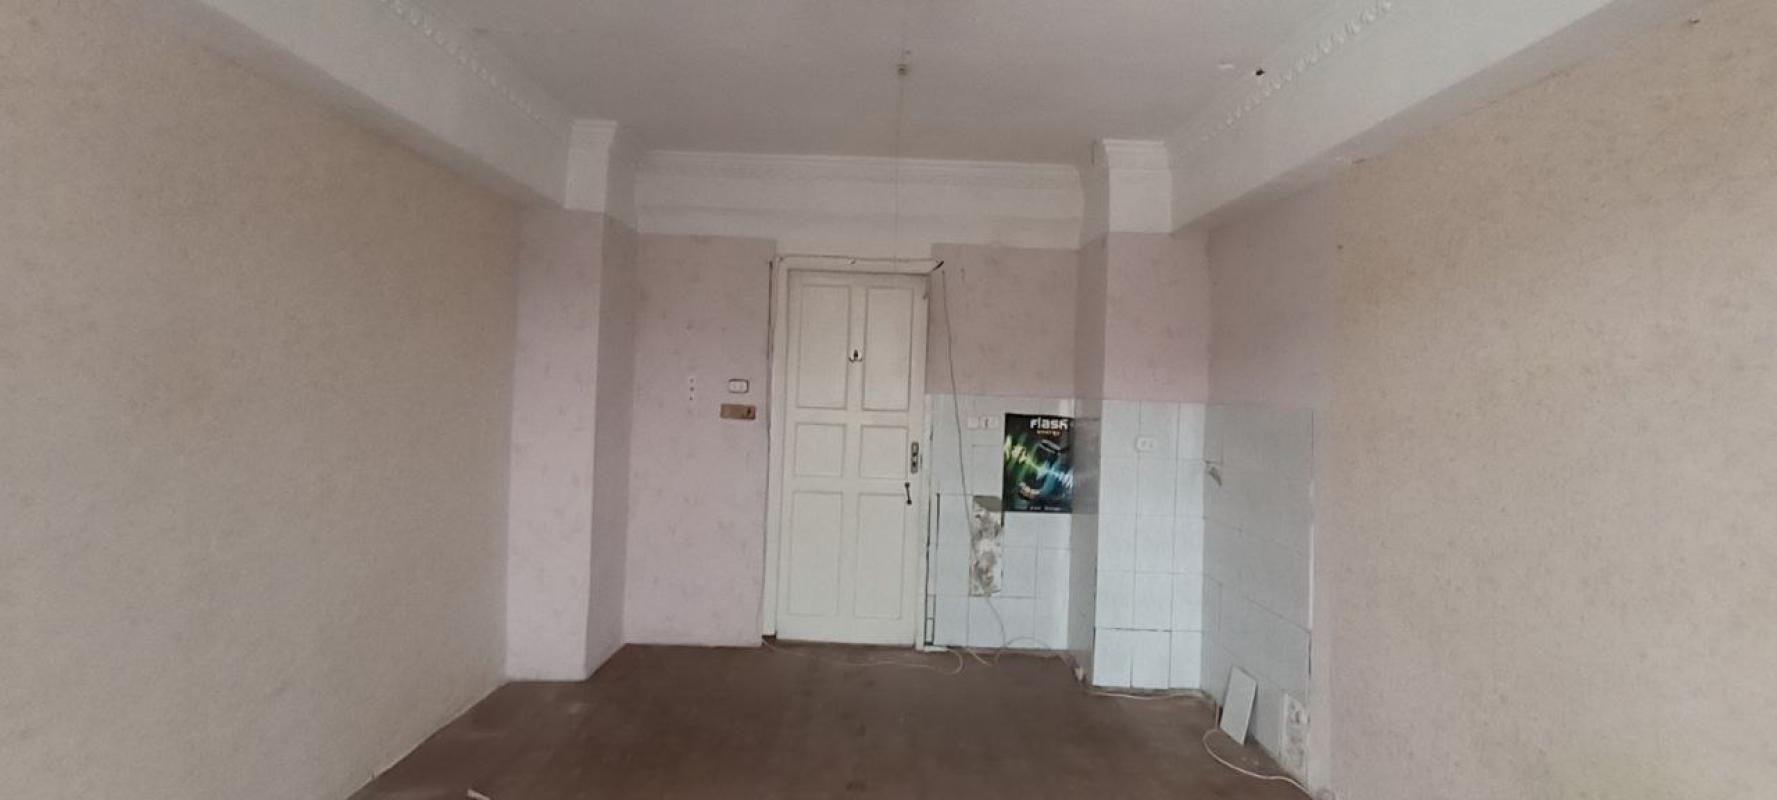 На продаже комната в общежитии, по адресу: г. - Новотроицк